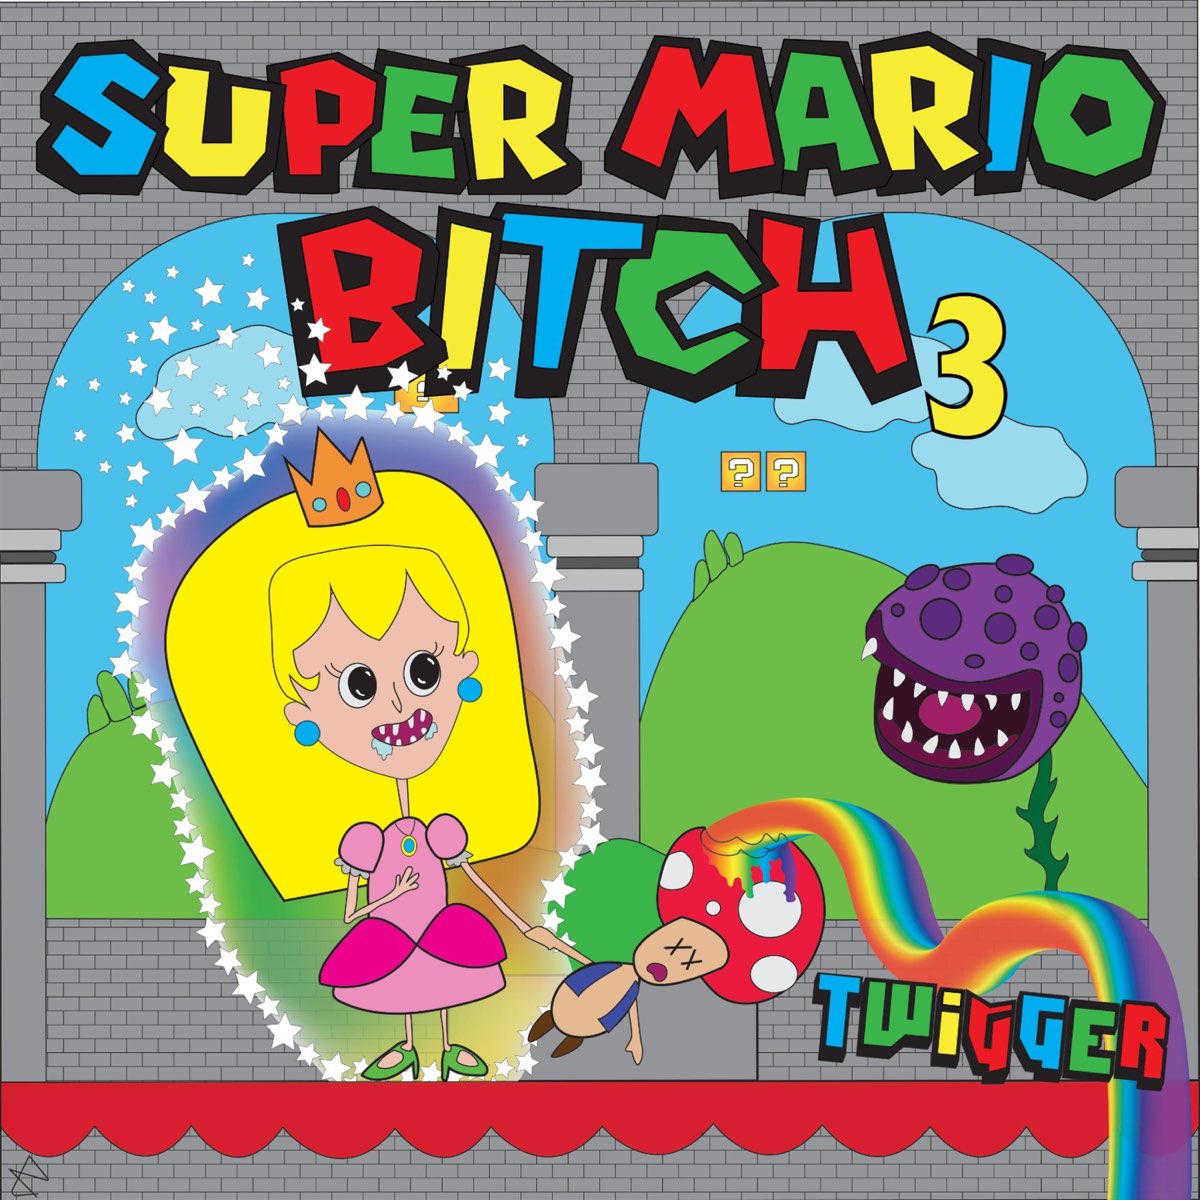 d tha man recommends Super Princess Bitch Game